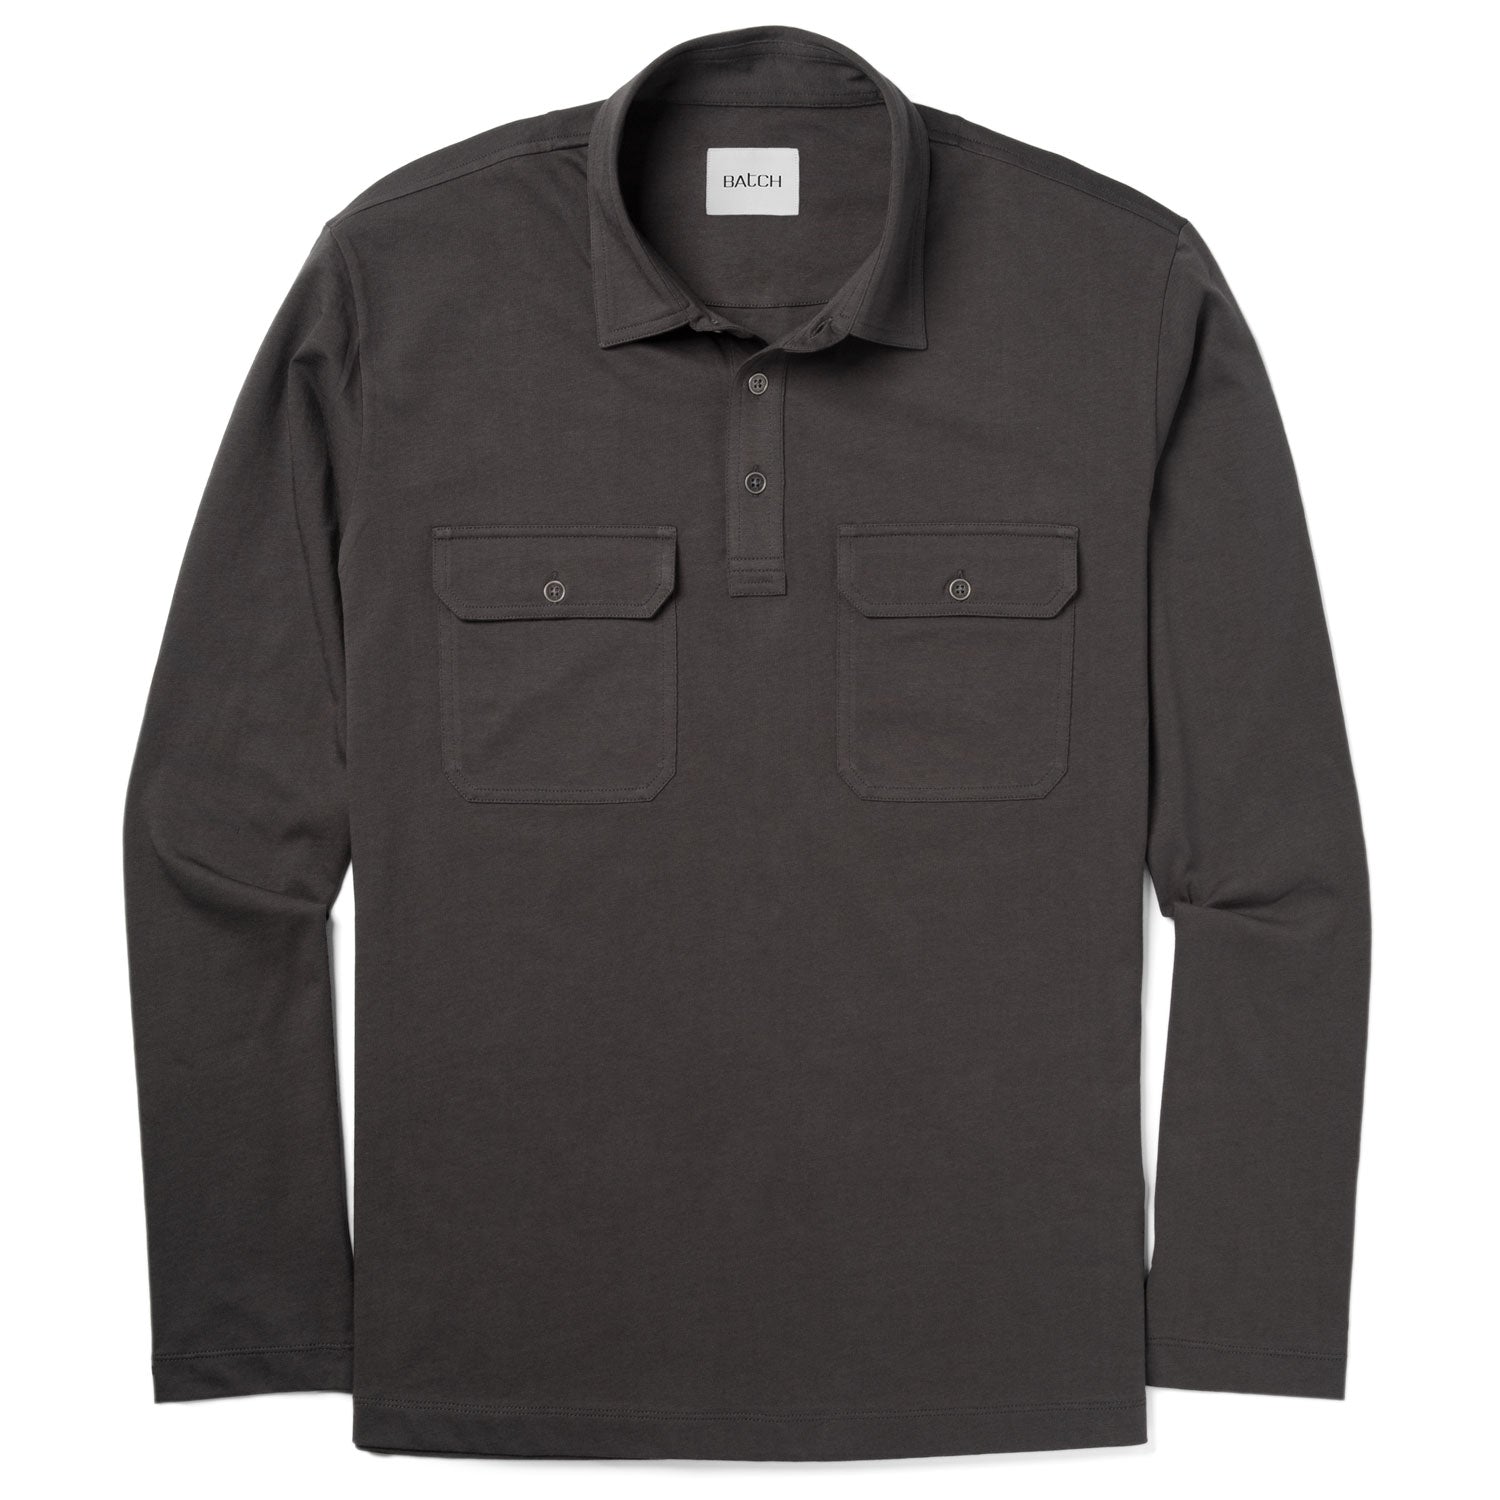 Constructor Polo Shirt –  Slate Gray Cotton Jersey